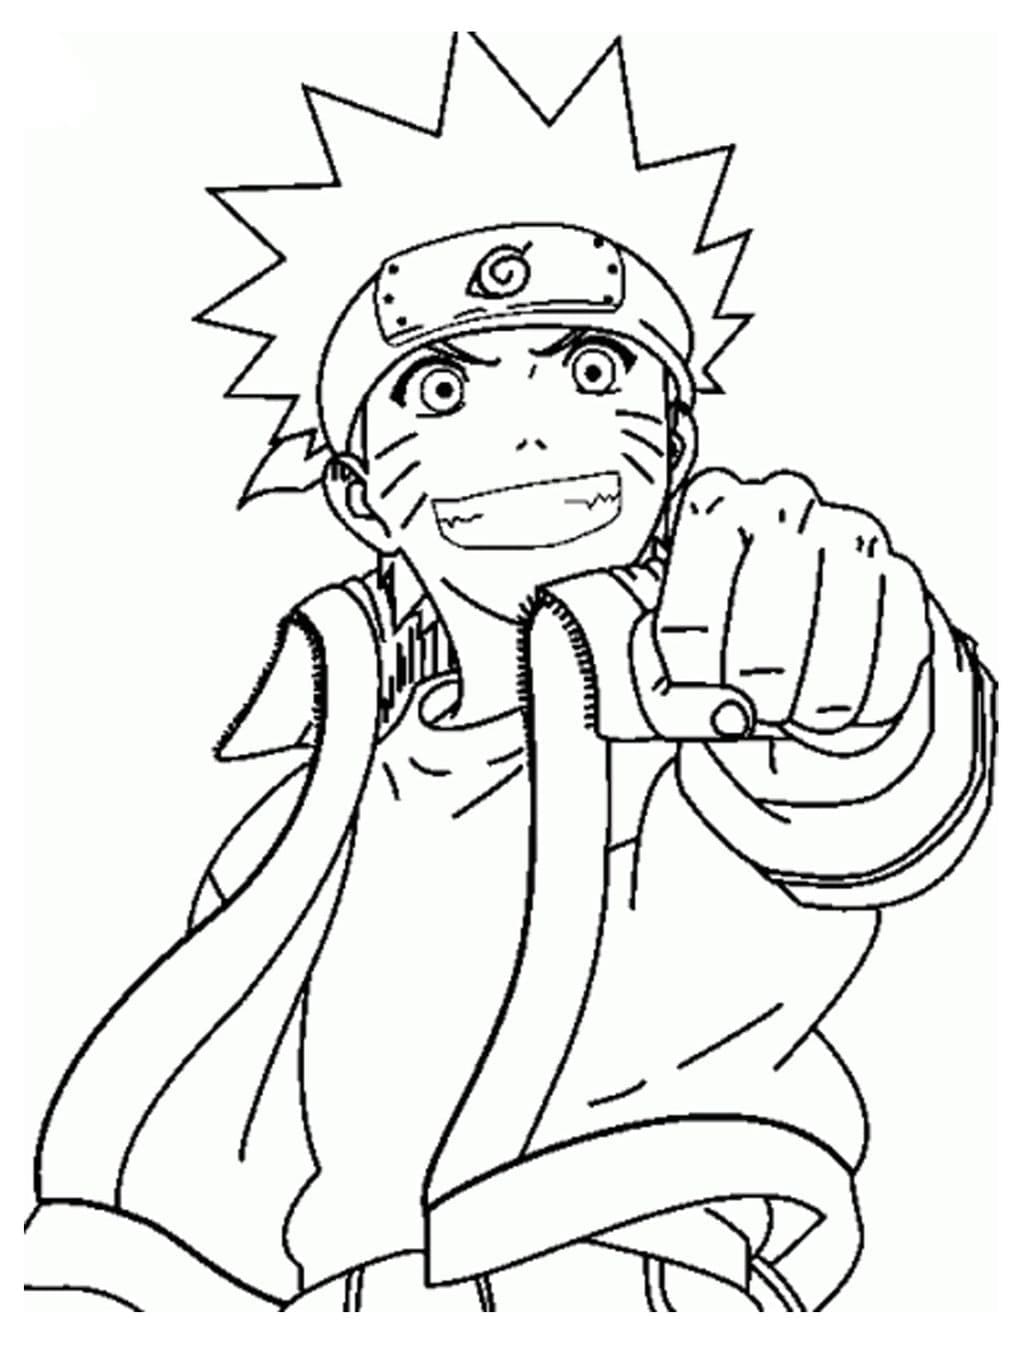 Coloriage Naruto à imprimer